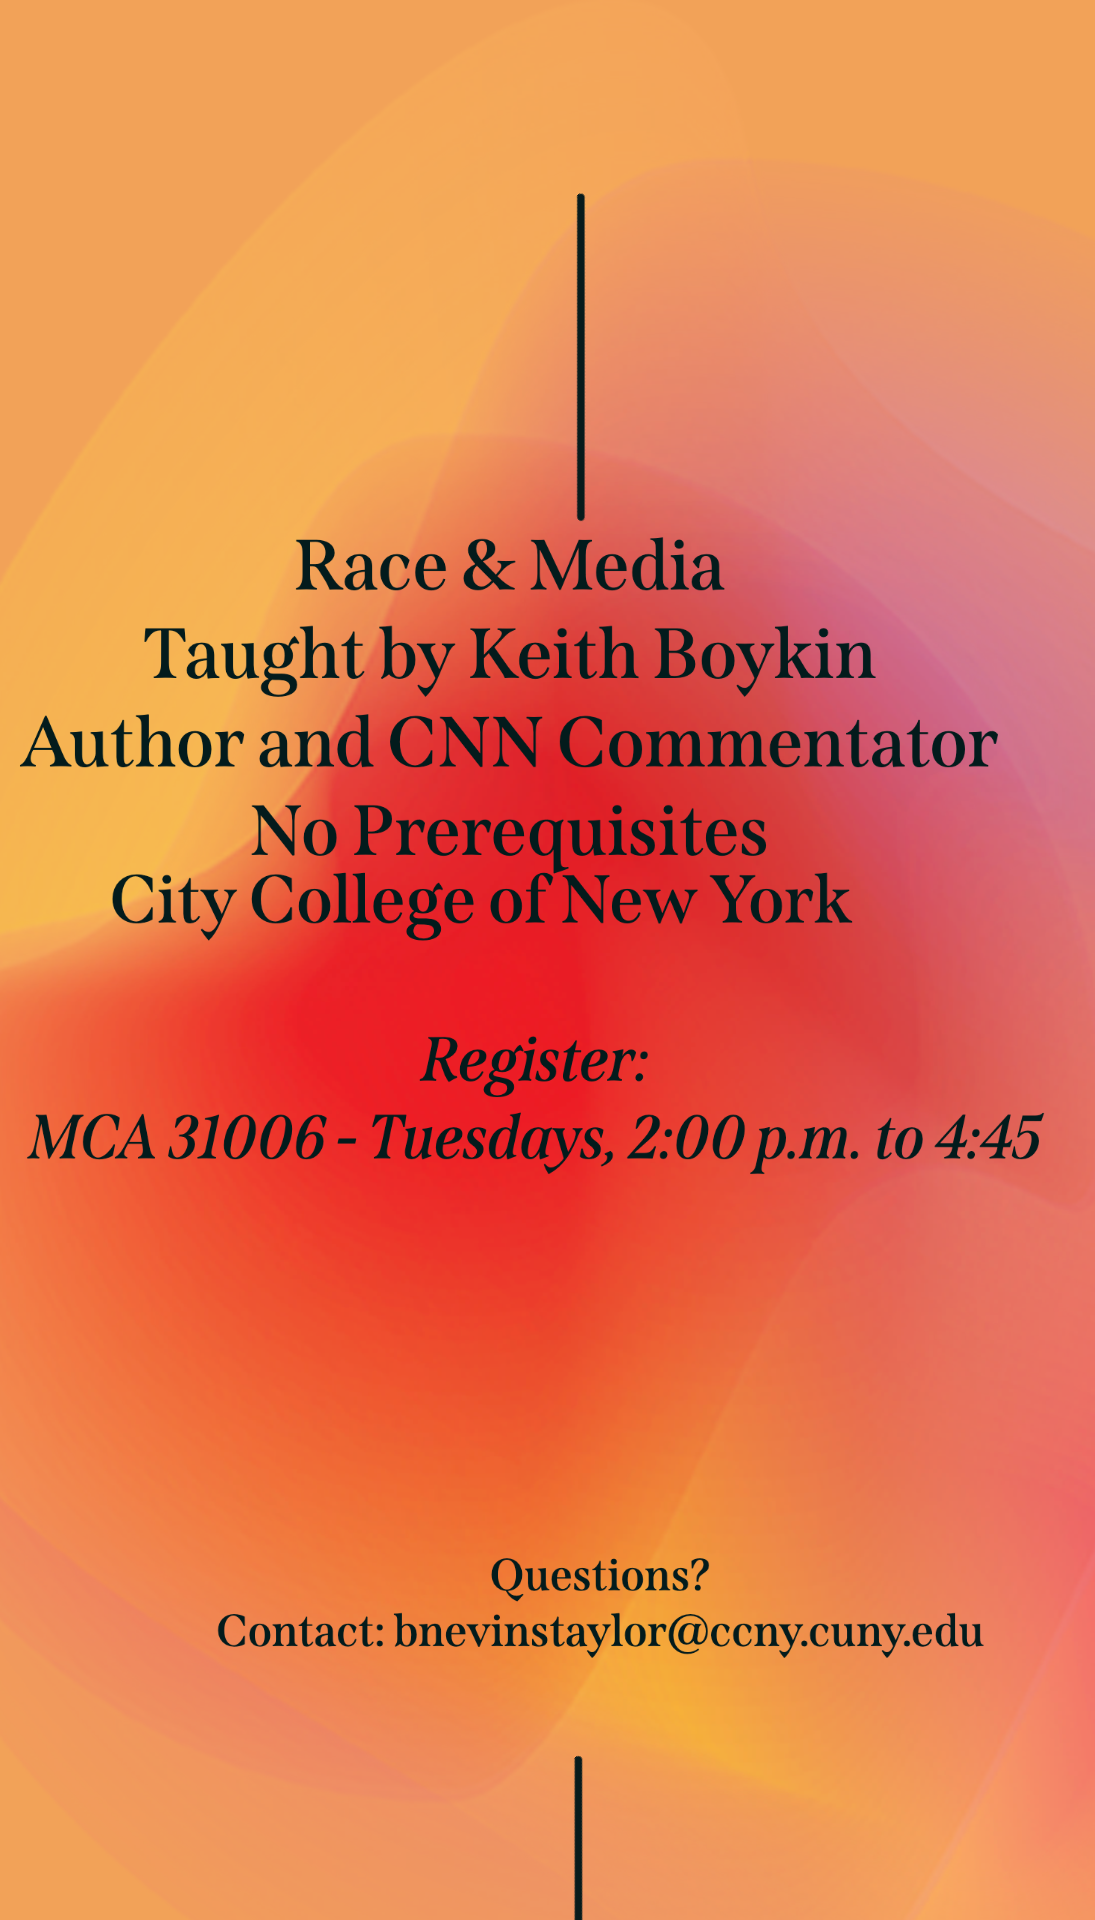 Race & Media Flyer 